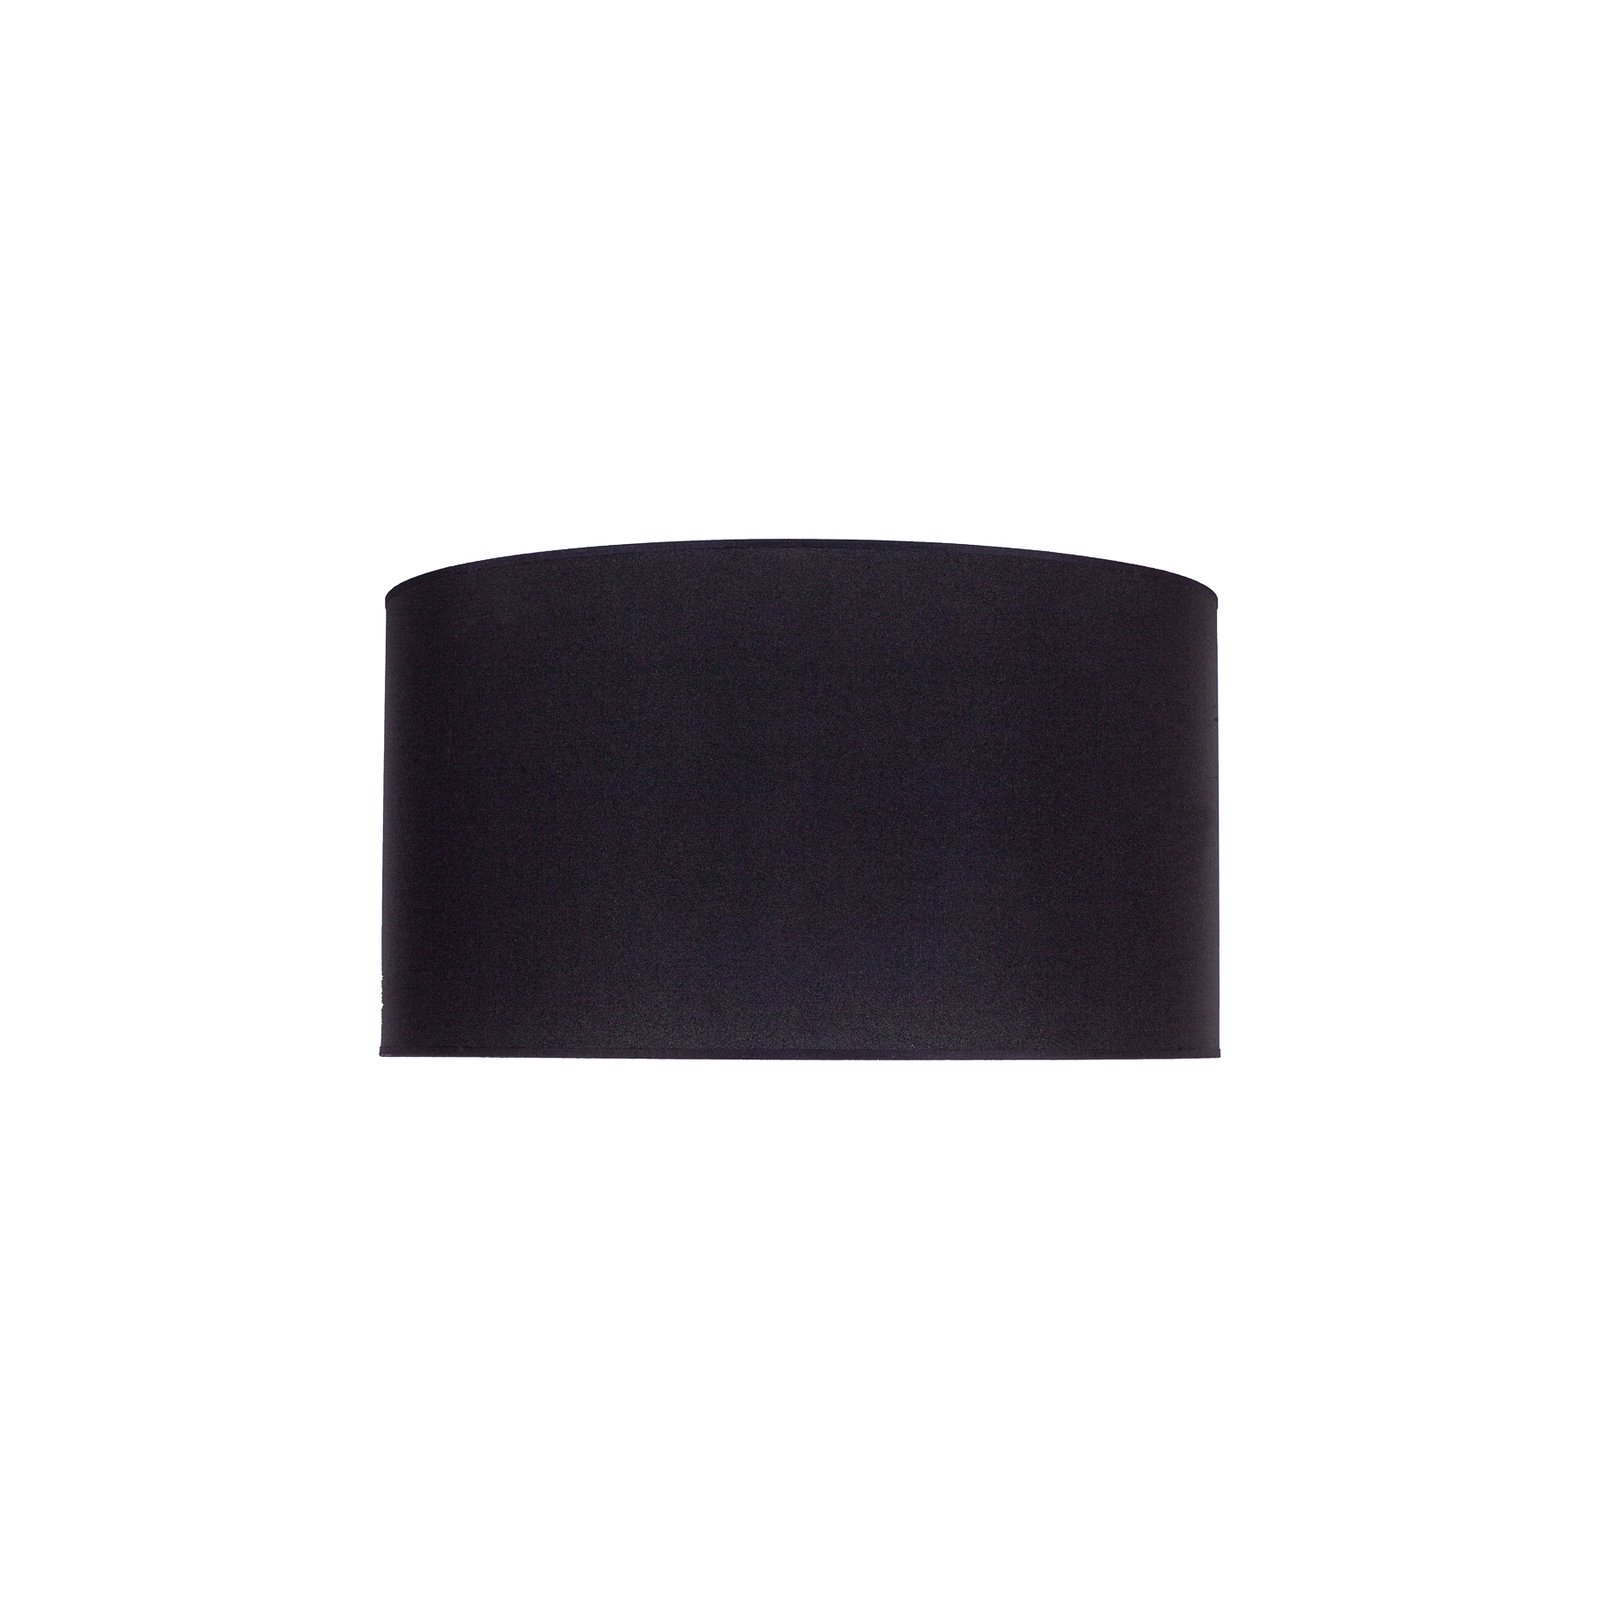 Lampenschirm Roller Ø 40 cm, schwarz